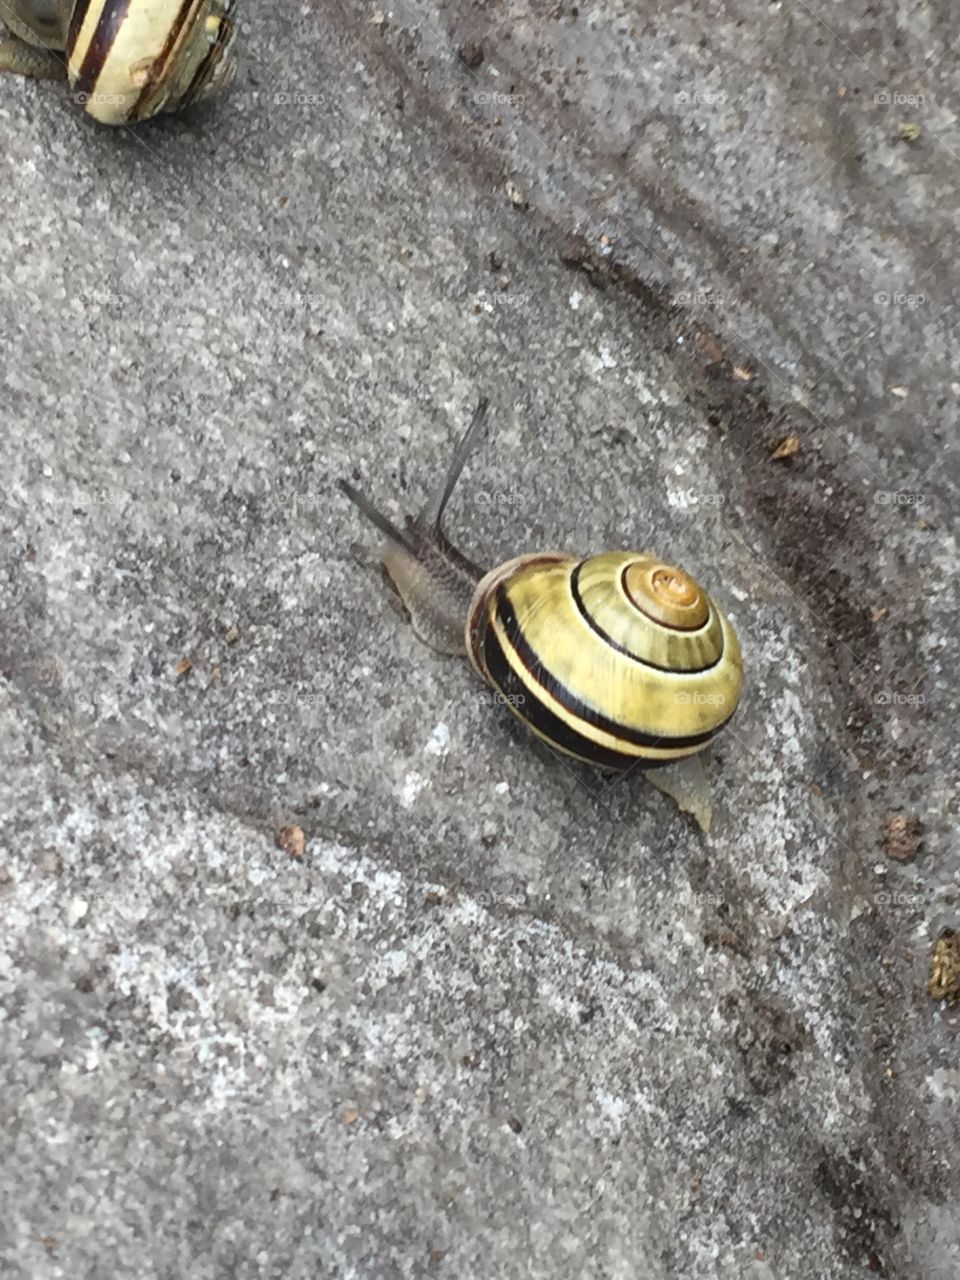 Snails in Beautiful British Columbia